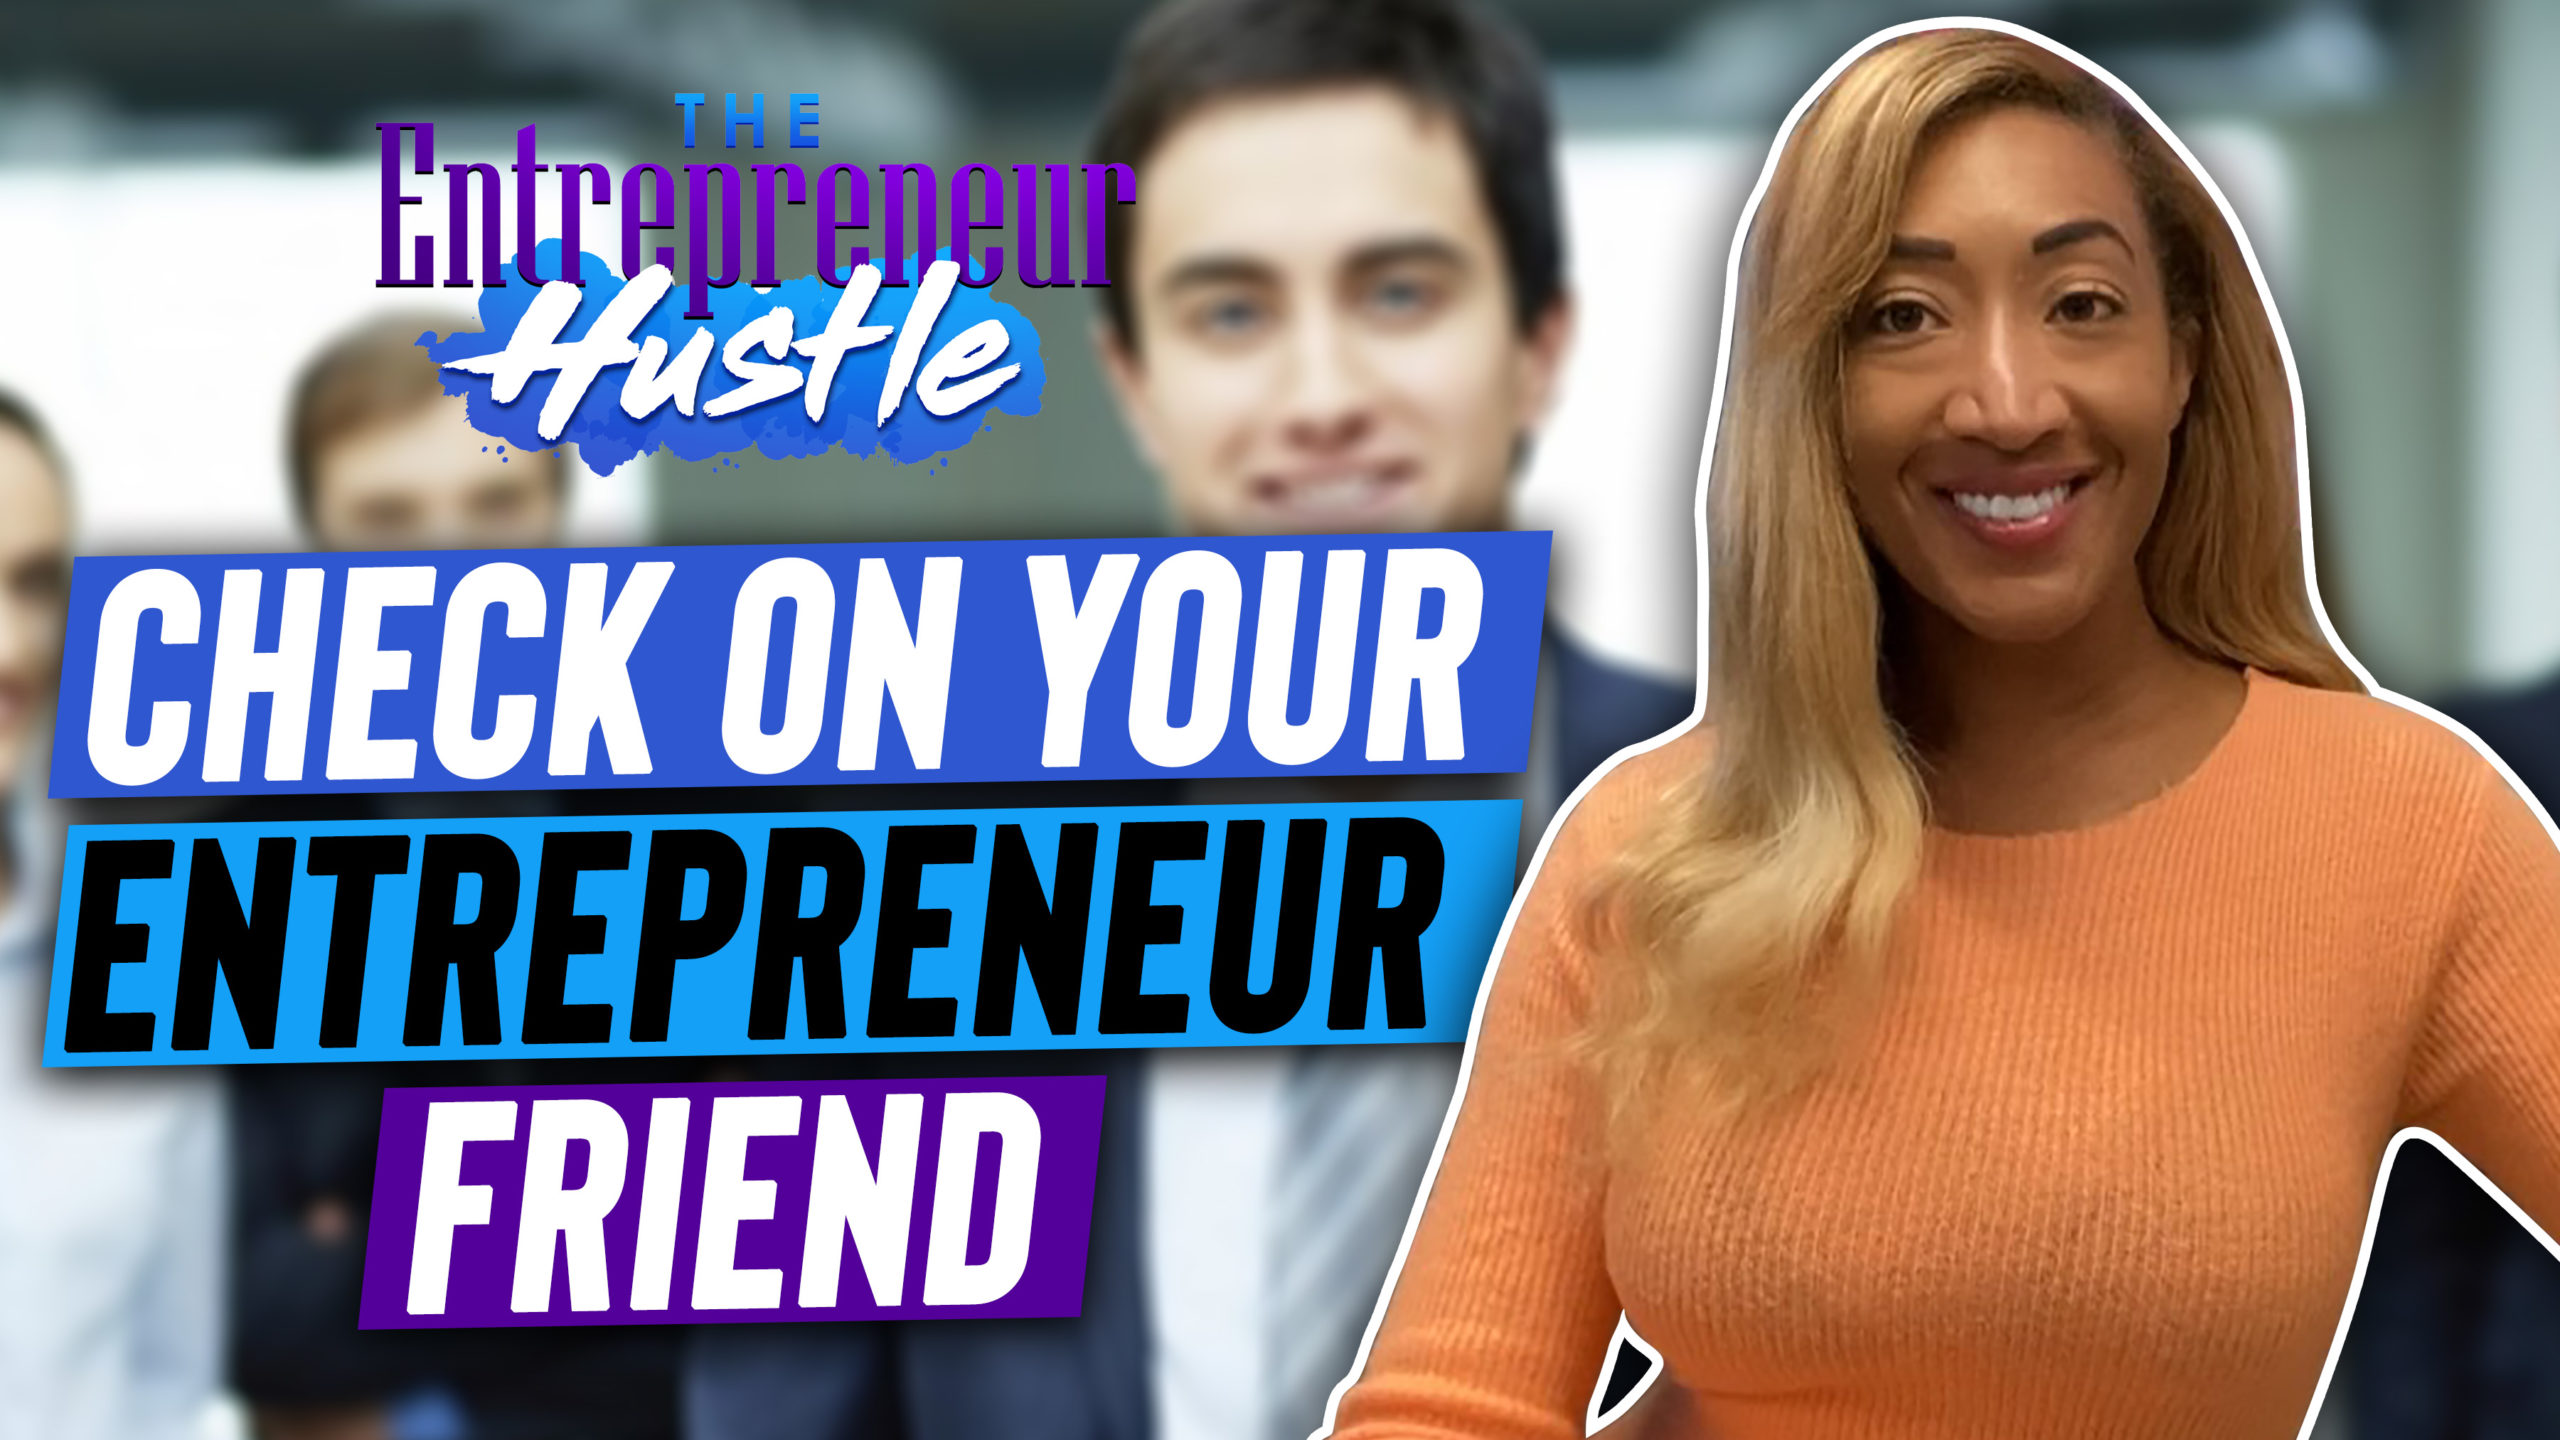 Check on your Entrepreneur Friend